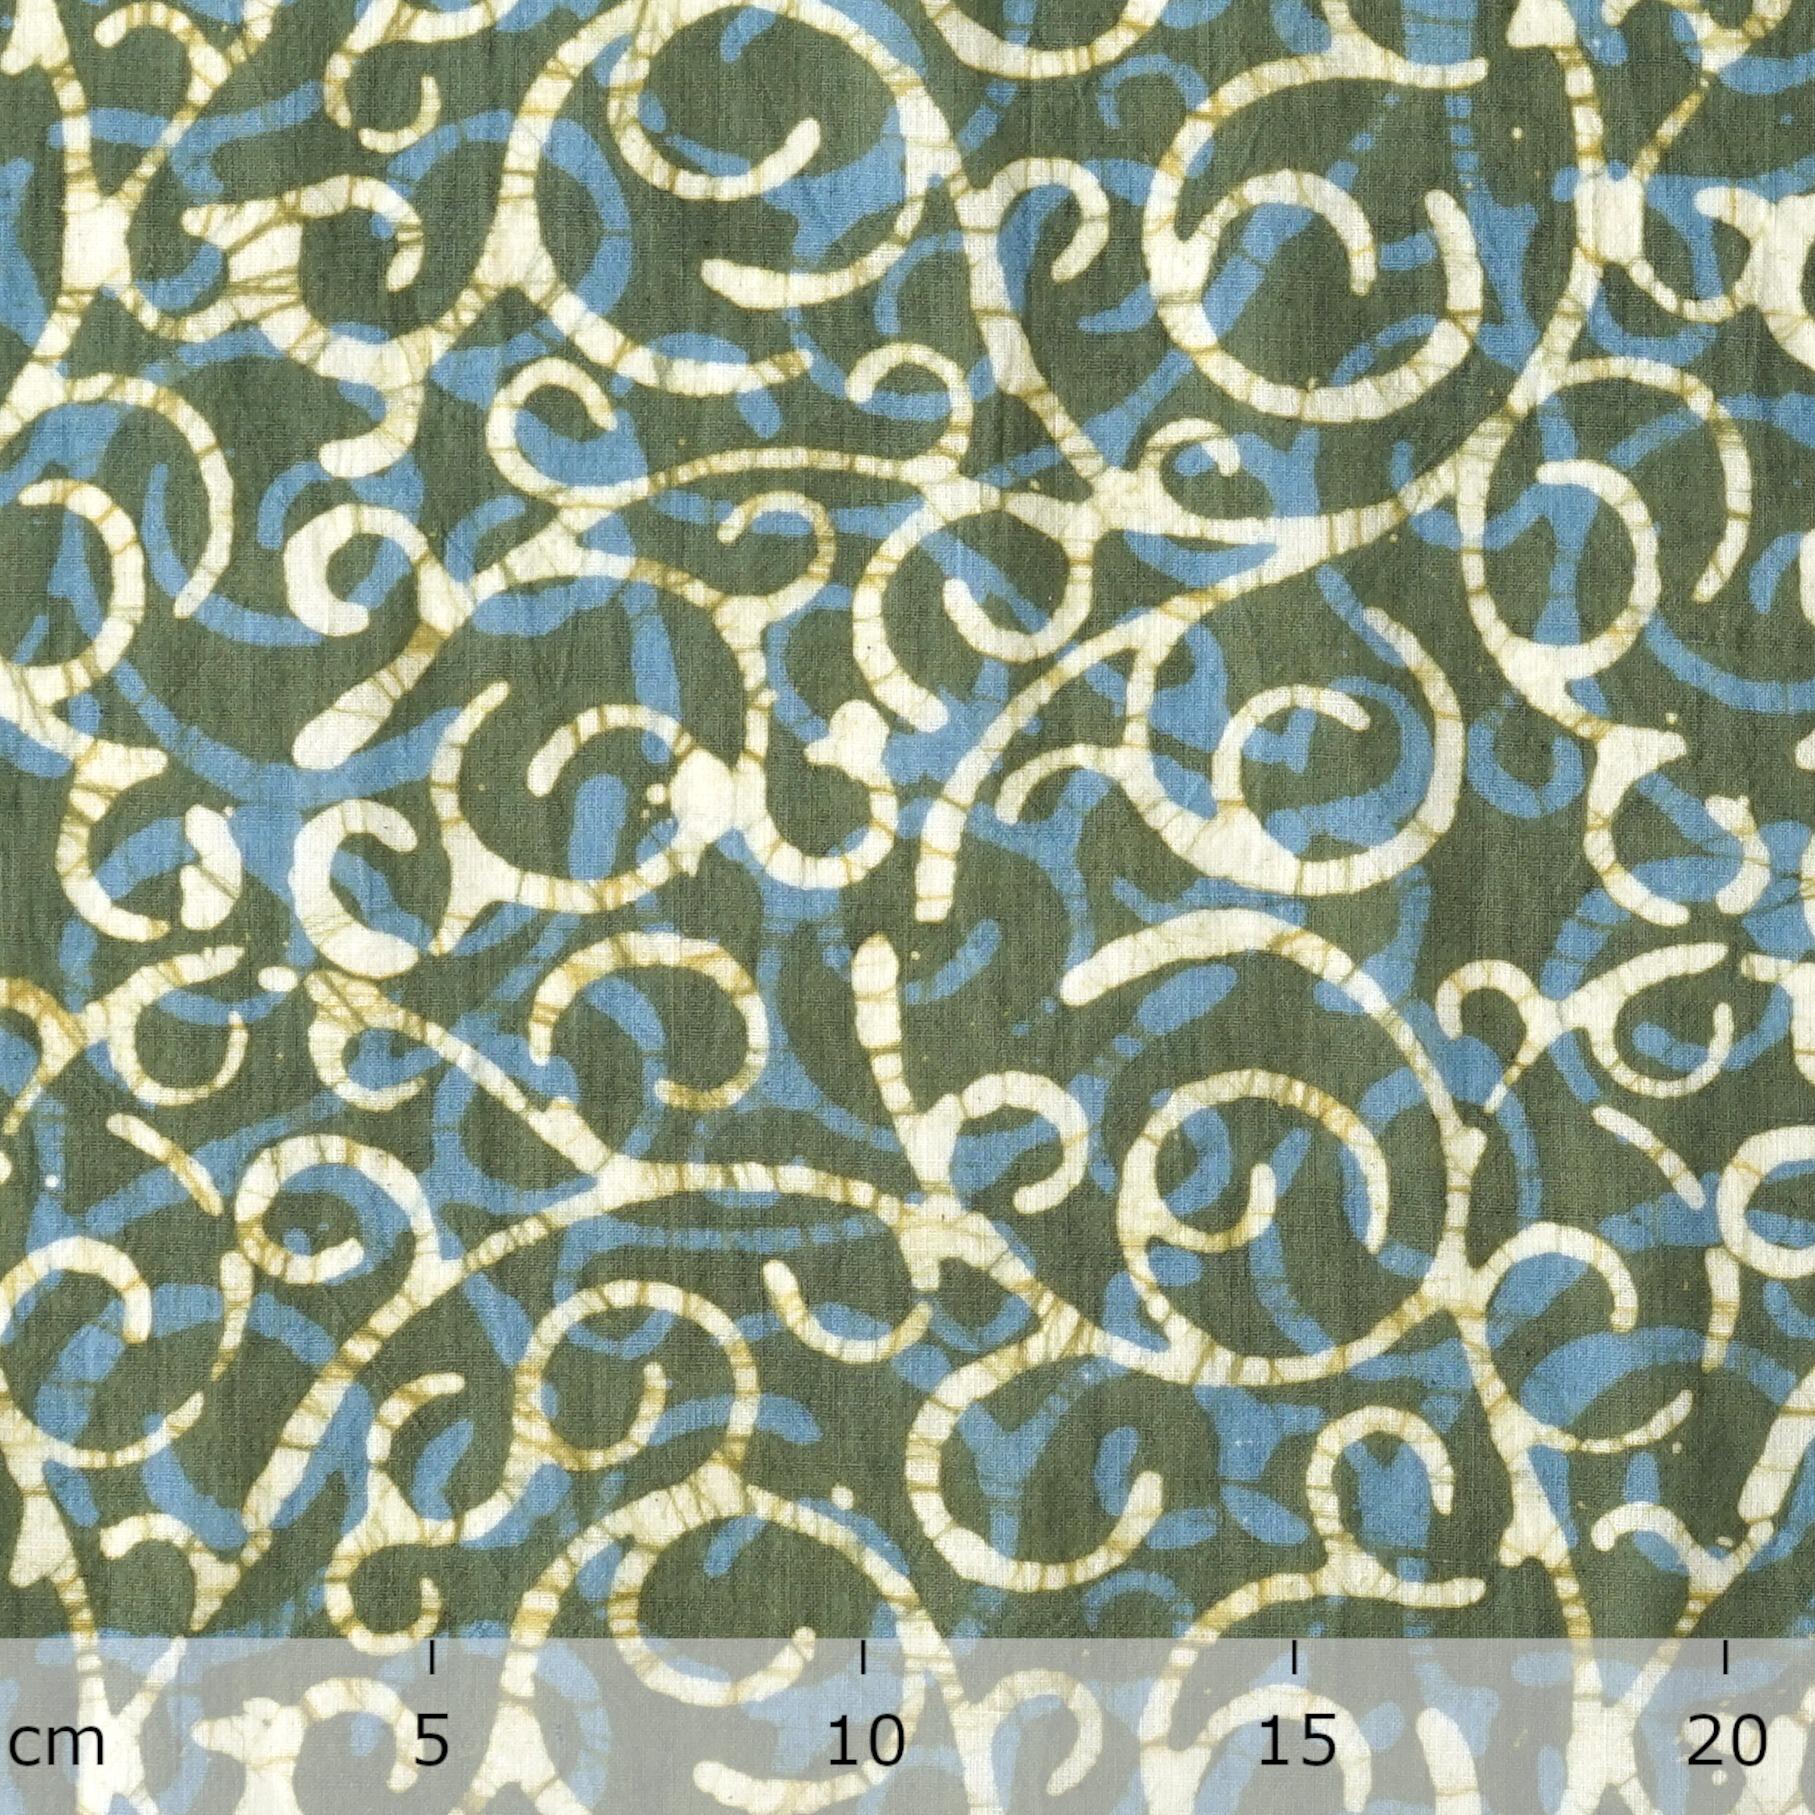 Block-Printed Batik Cotton Fabric From India - Aurora Design - Reactive Dye - Ruler